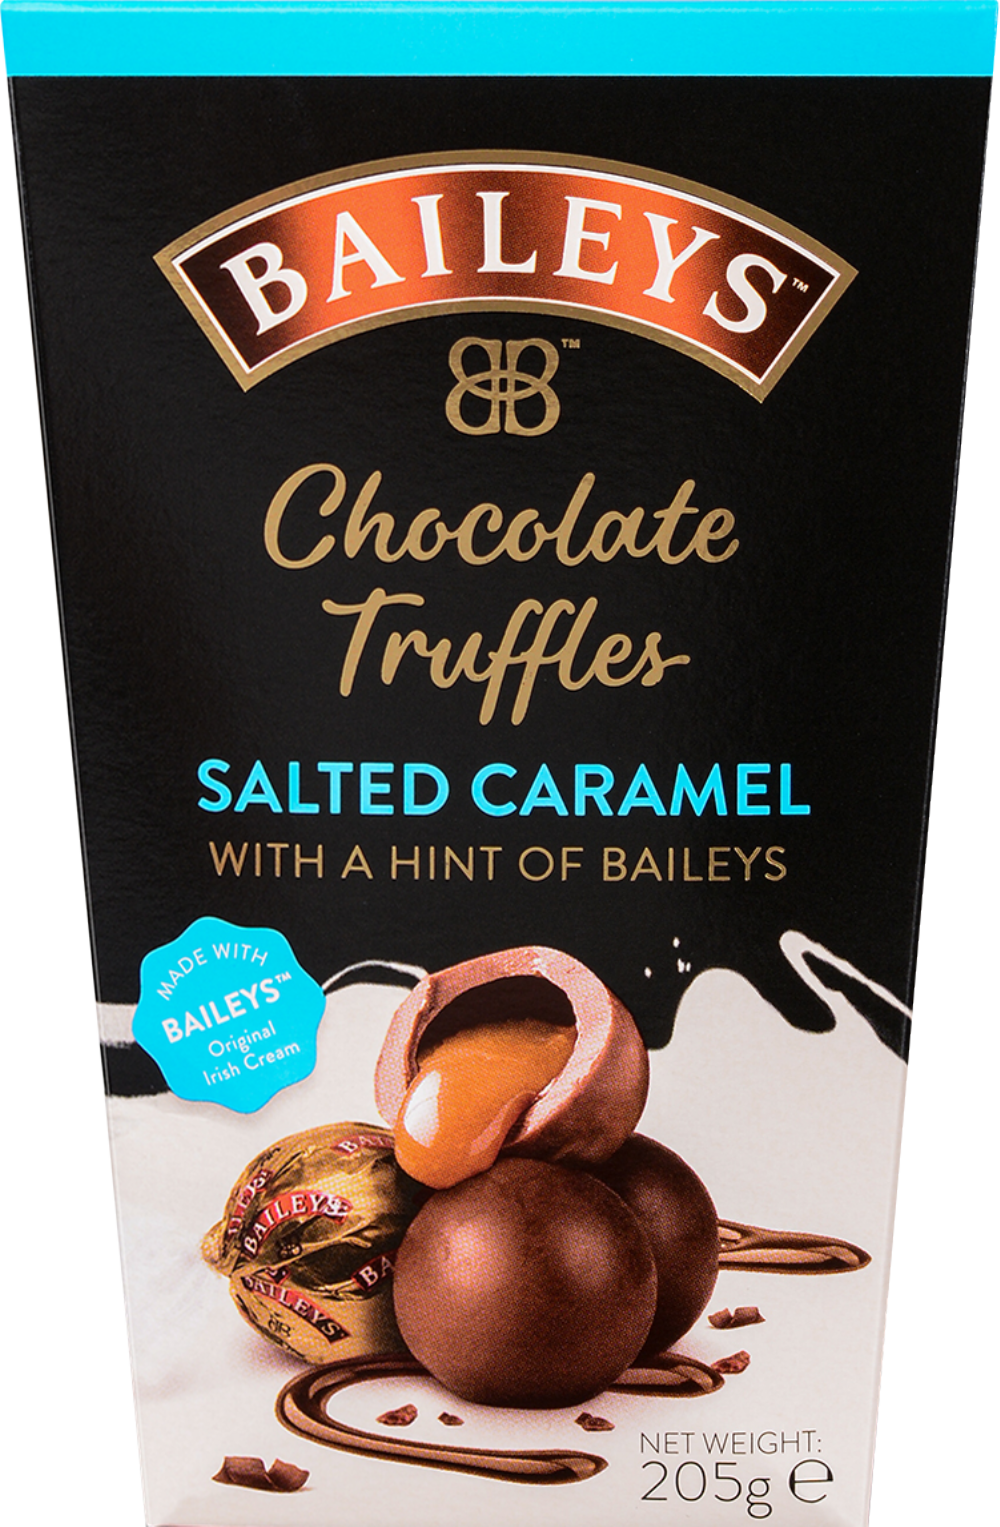 Chocolate truffle bar with Baileys